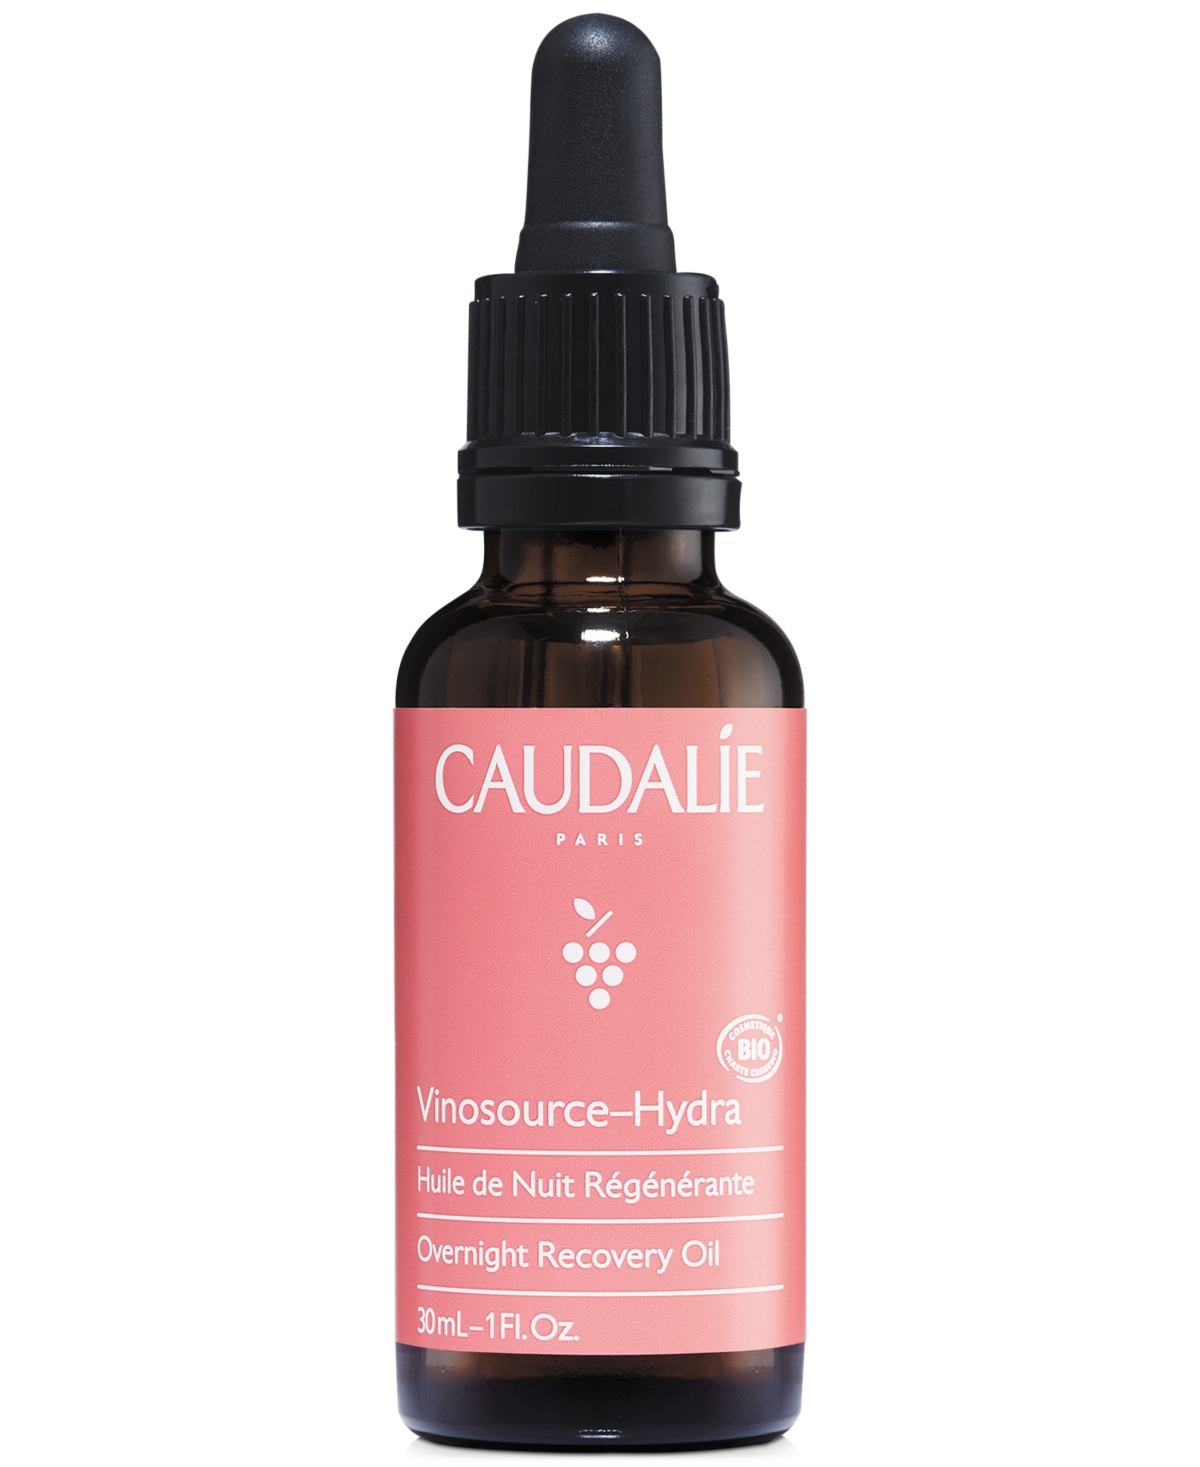 Caudalie Vinosource-Hydra Overnight Recovery Oil